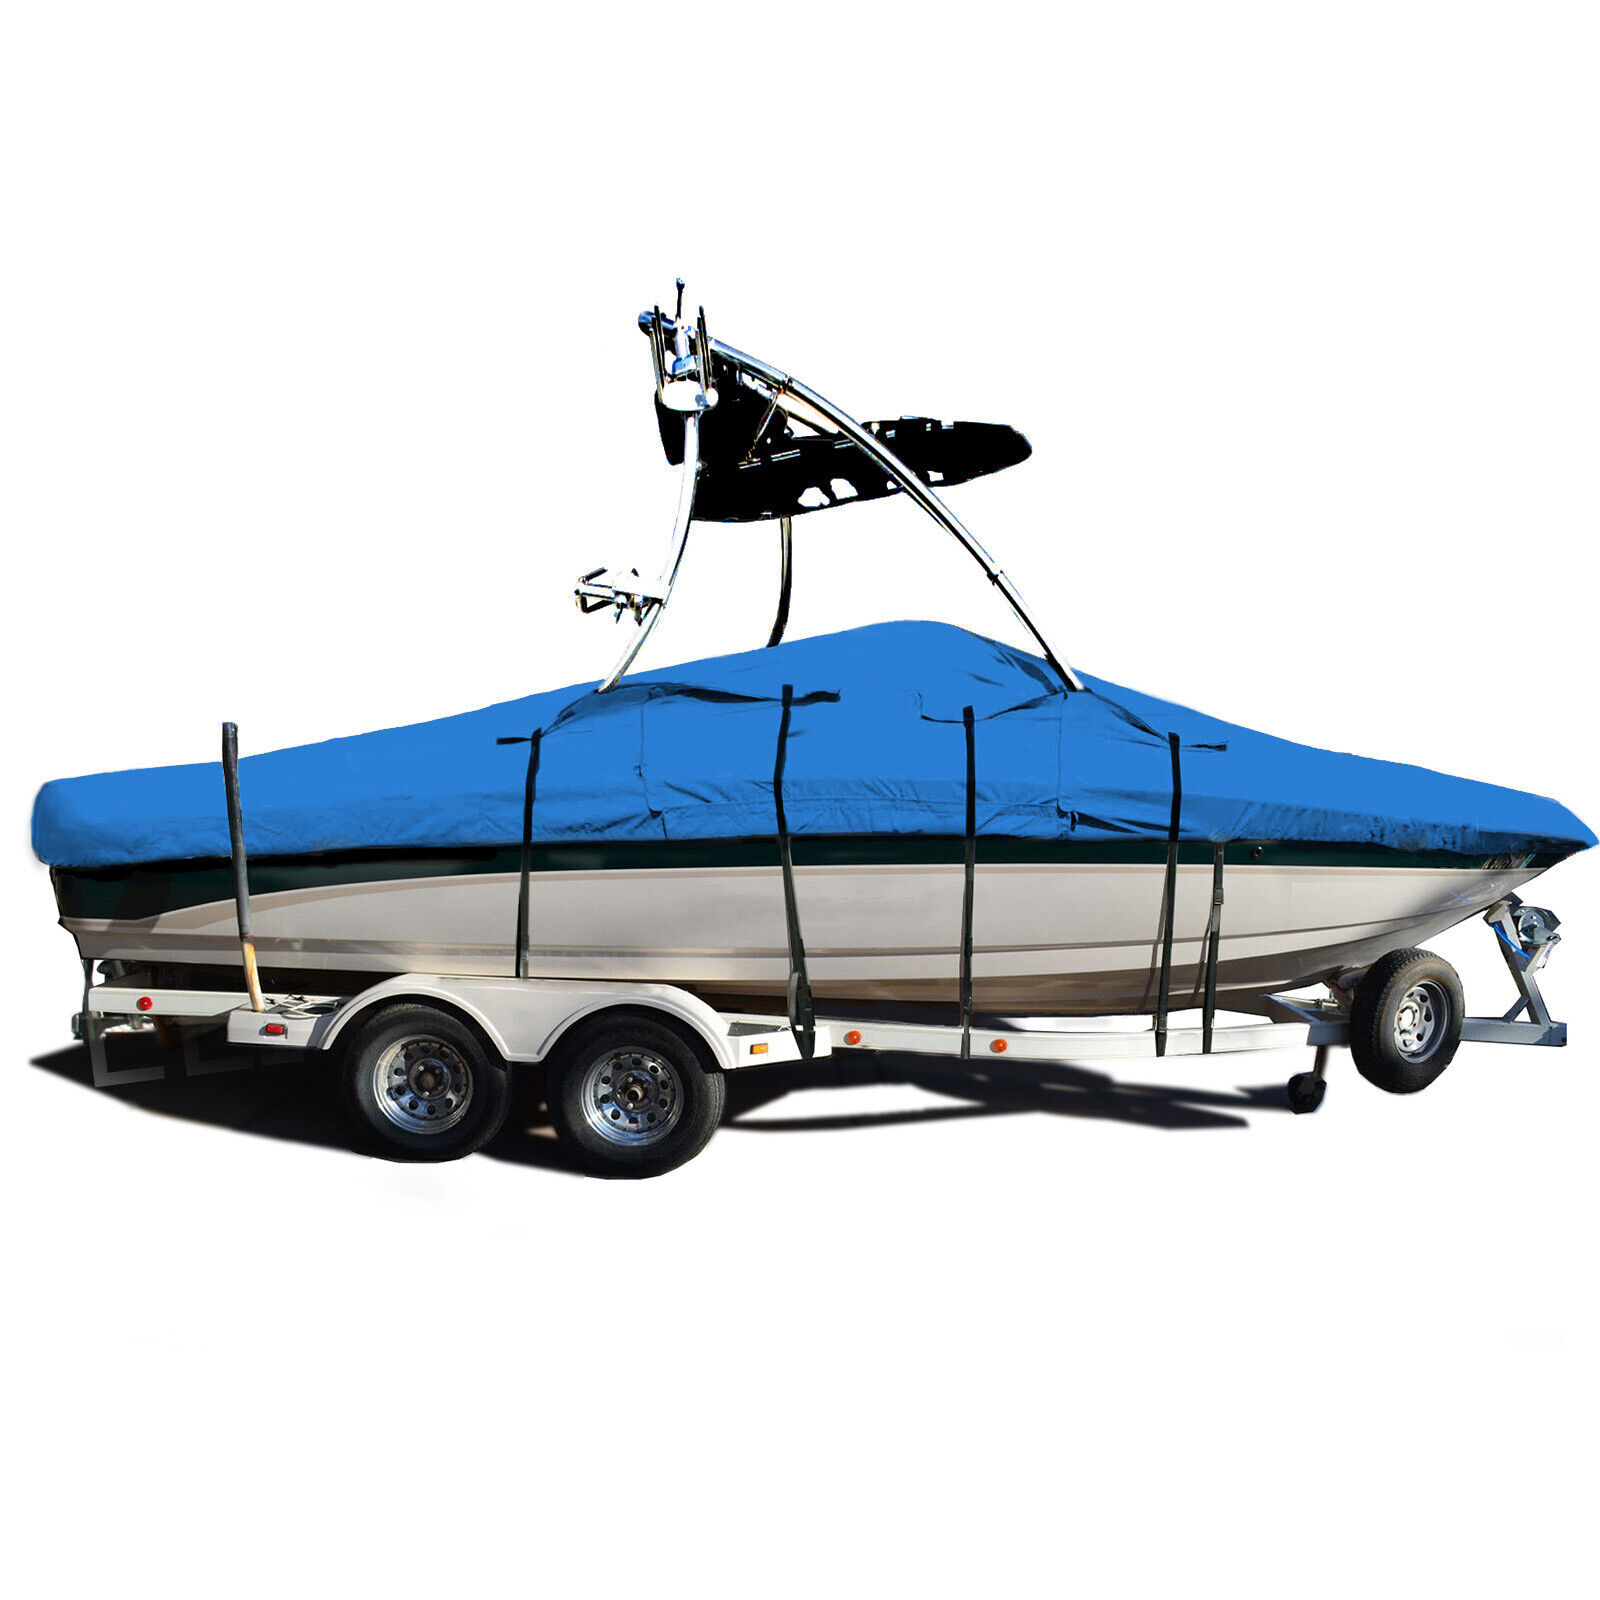 Ski centurion 21 Wakeboard Tower Trailerable Storage fishing ski Boat Cover